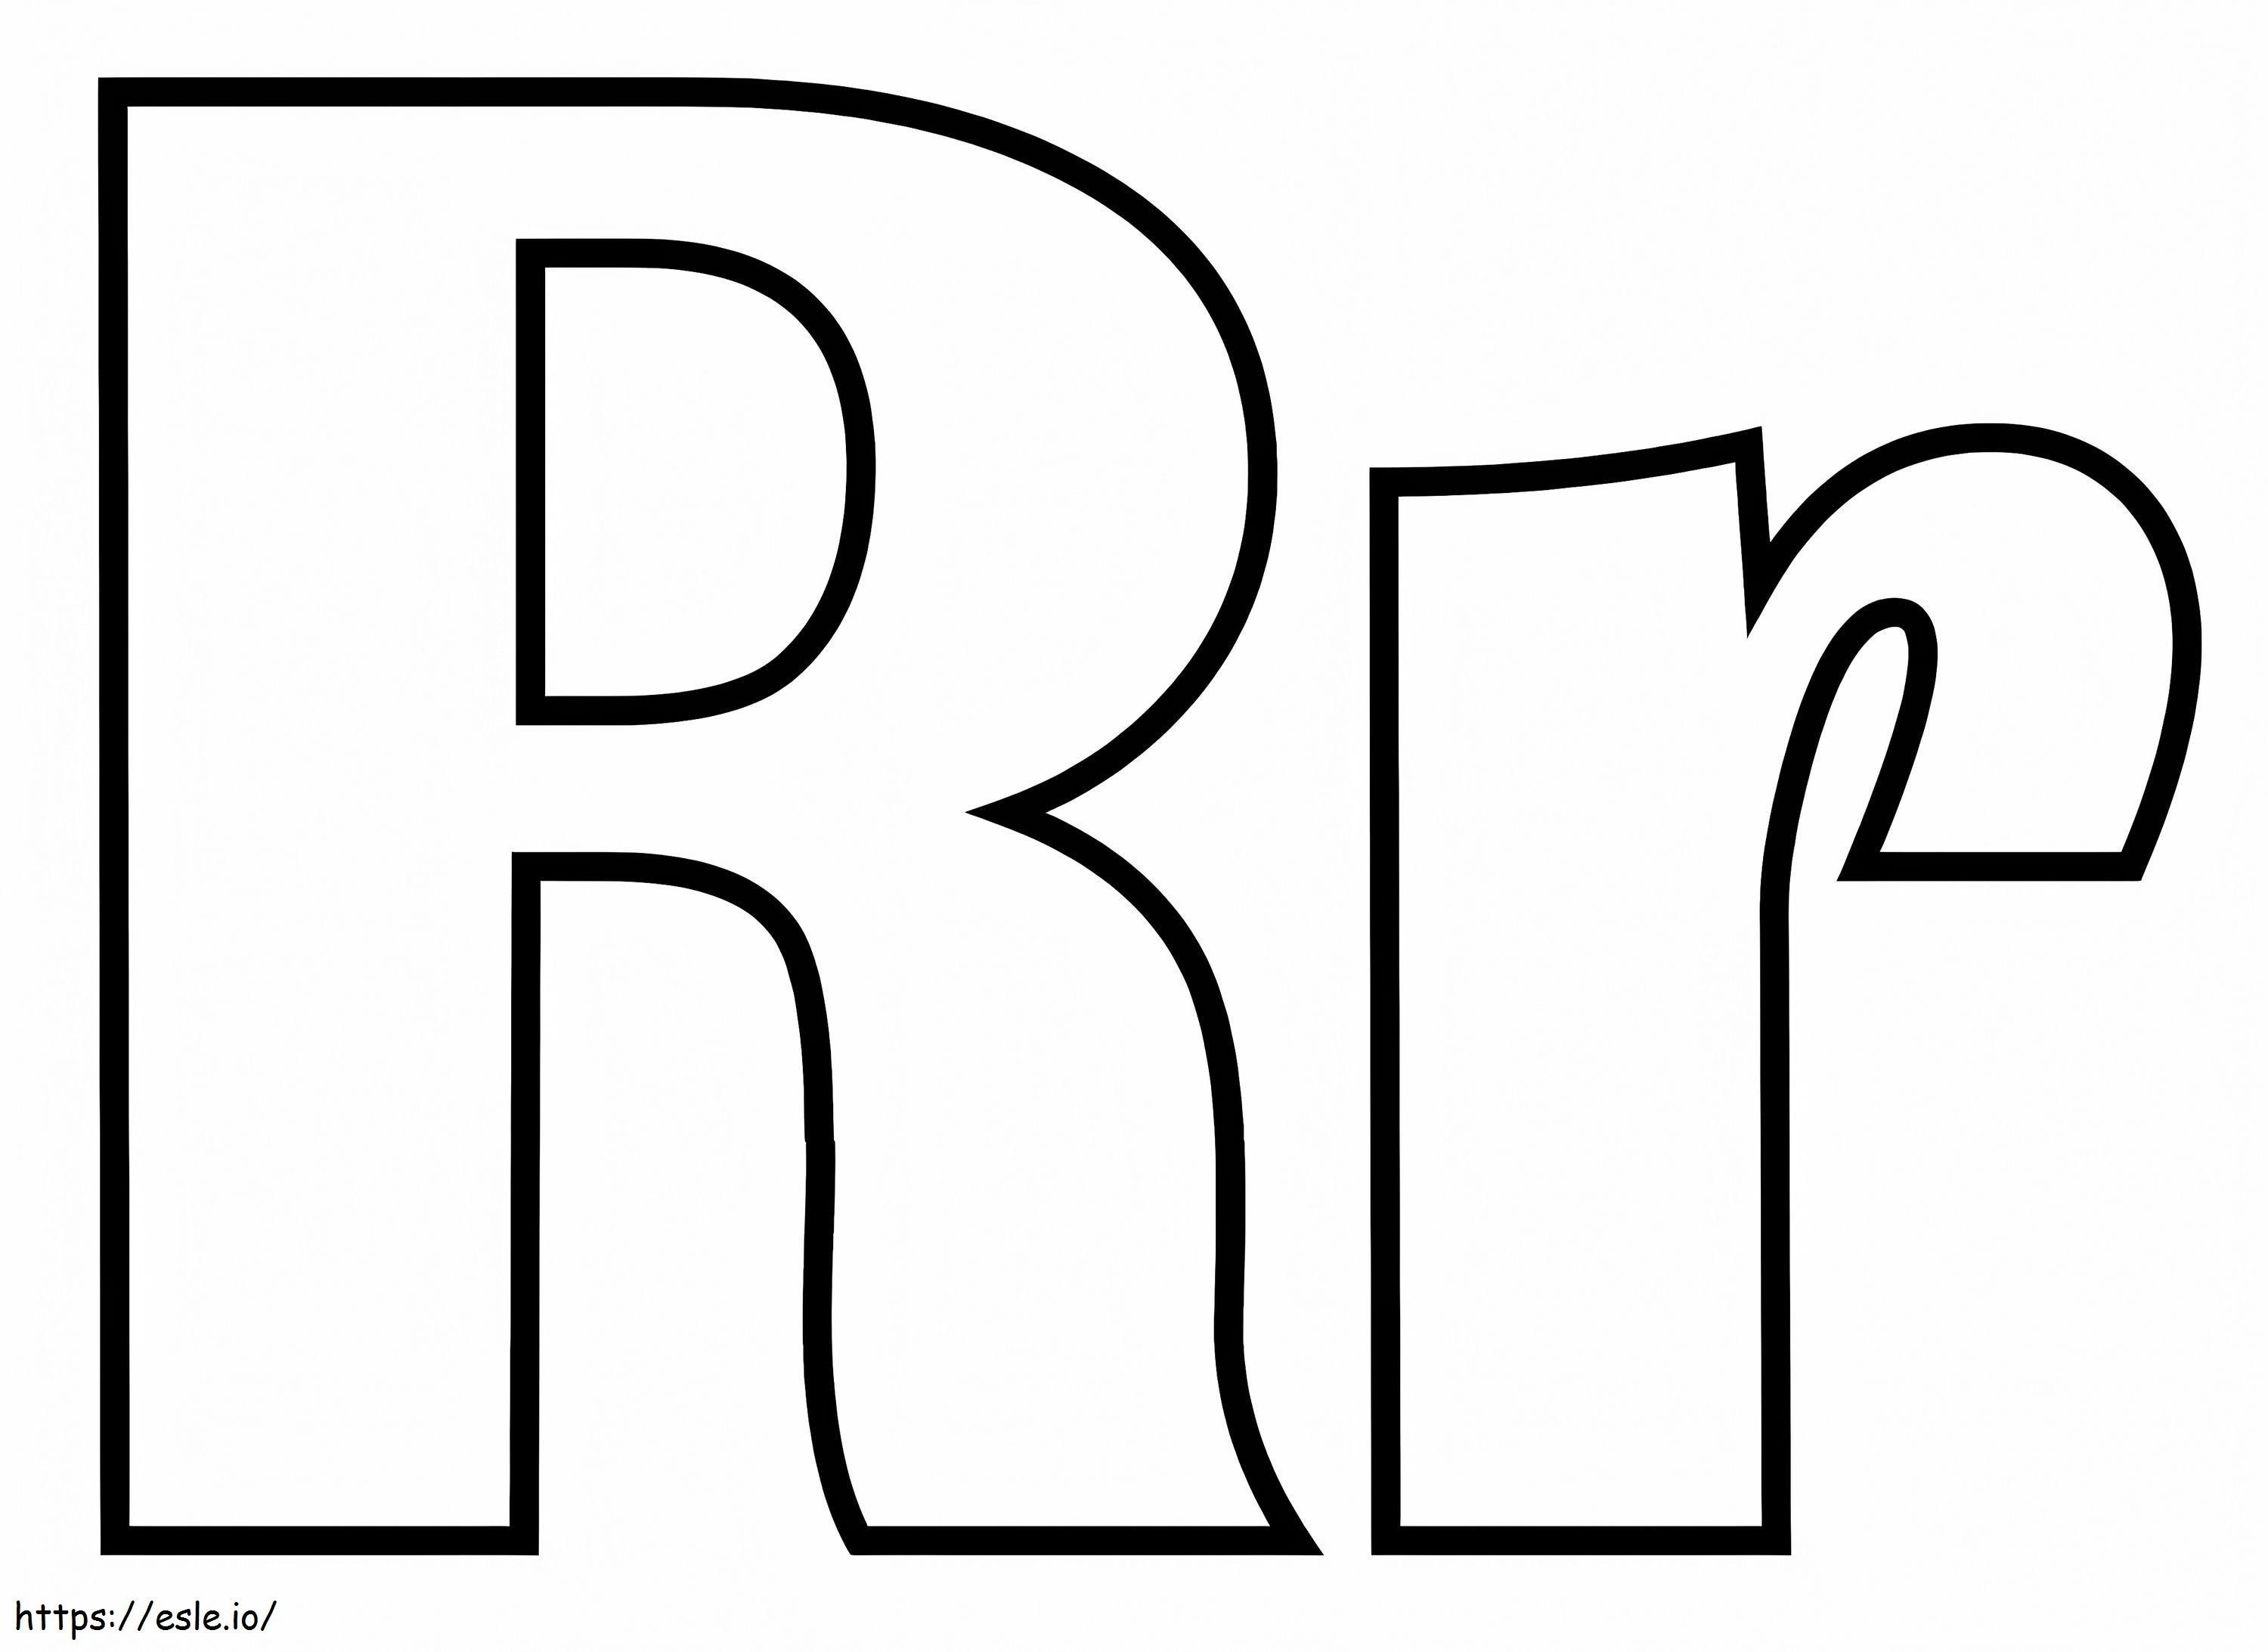 R betű 2 kifestő